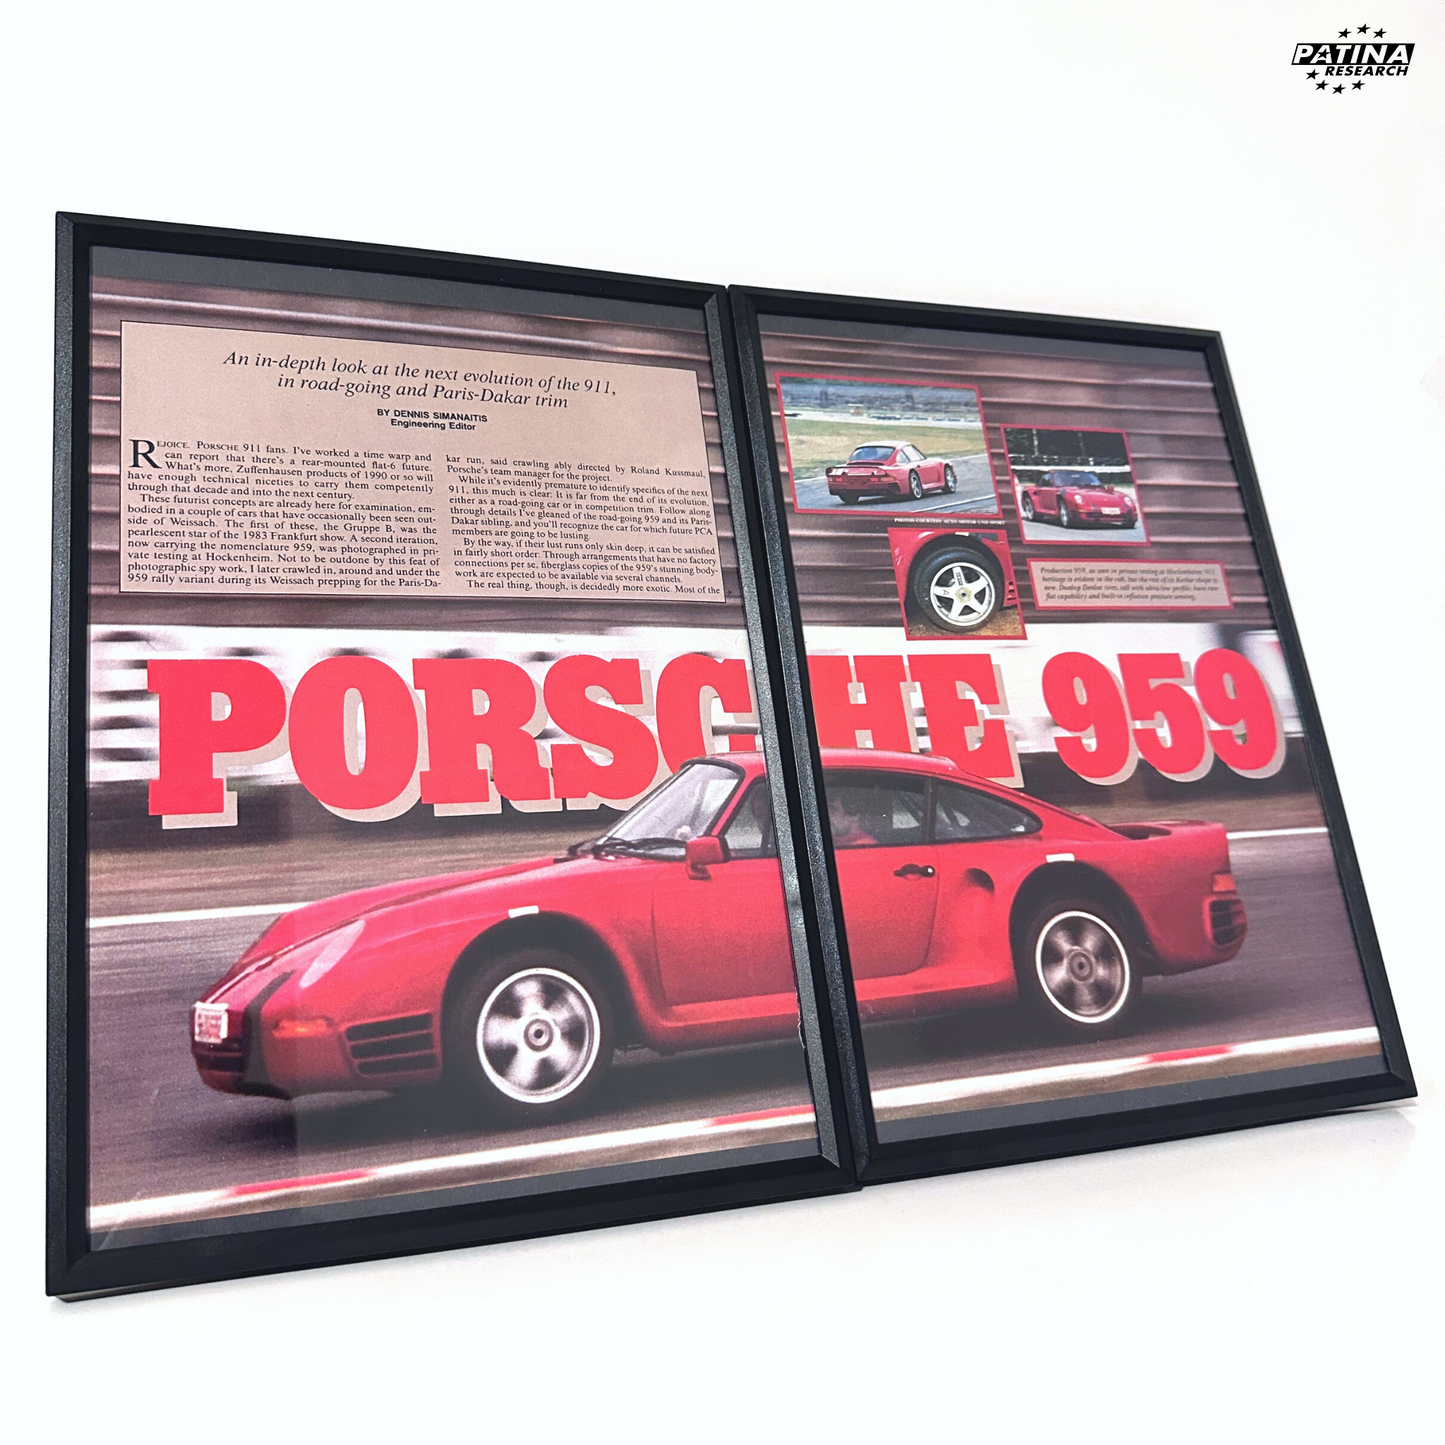 Porsche 959 in depth framed ad